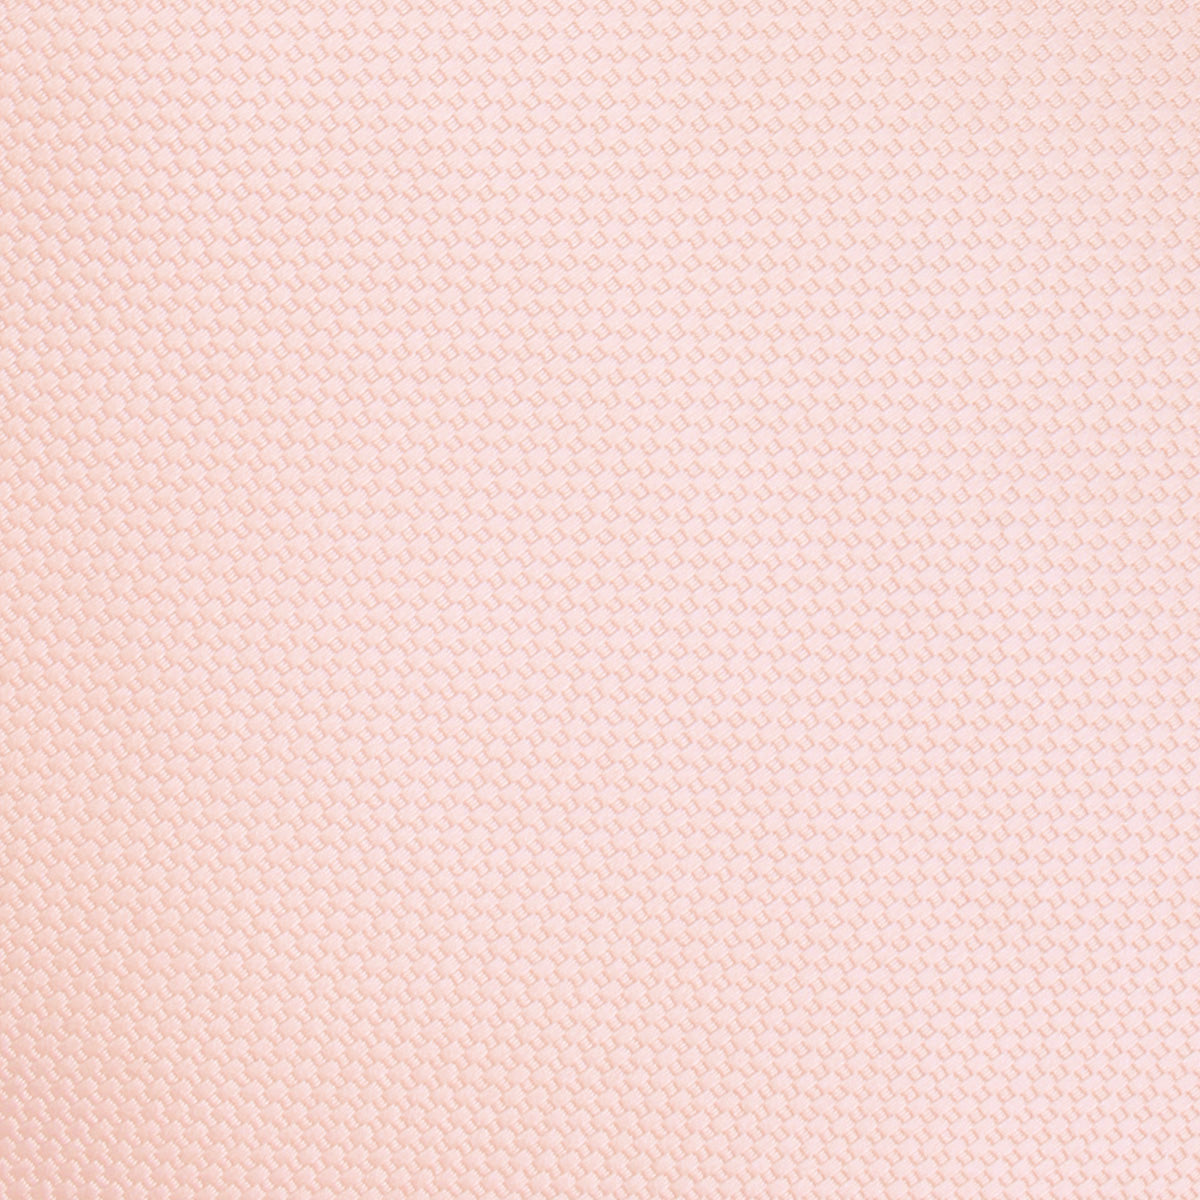 Blush Pink Basket Weave Skinny Tie Fabric